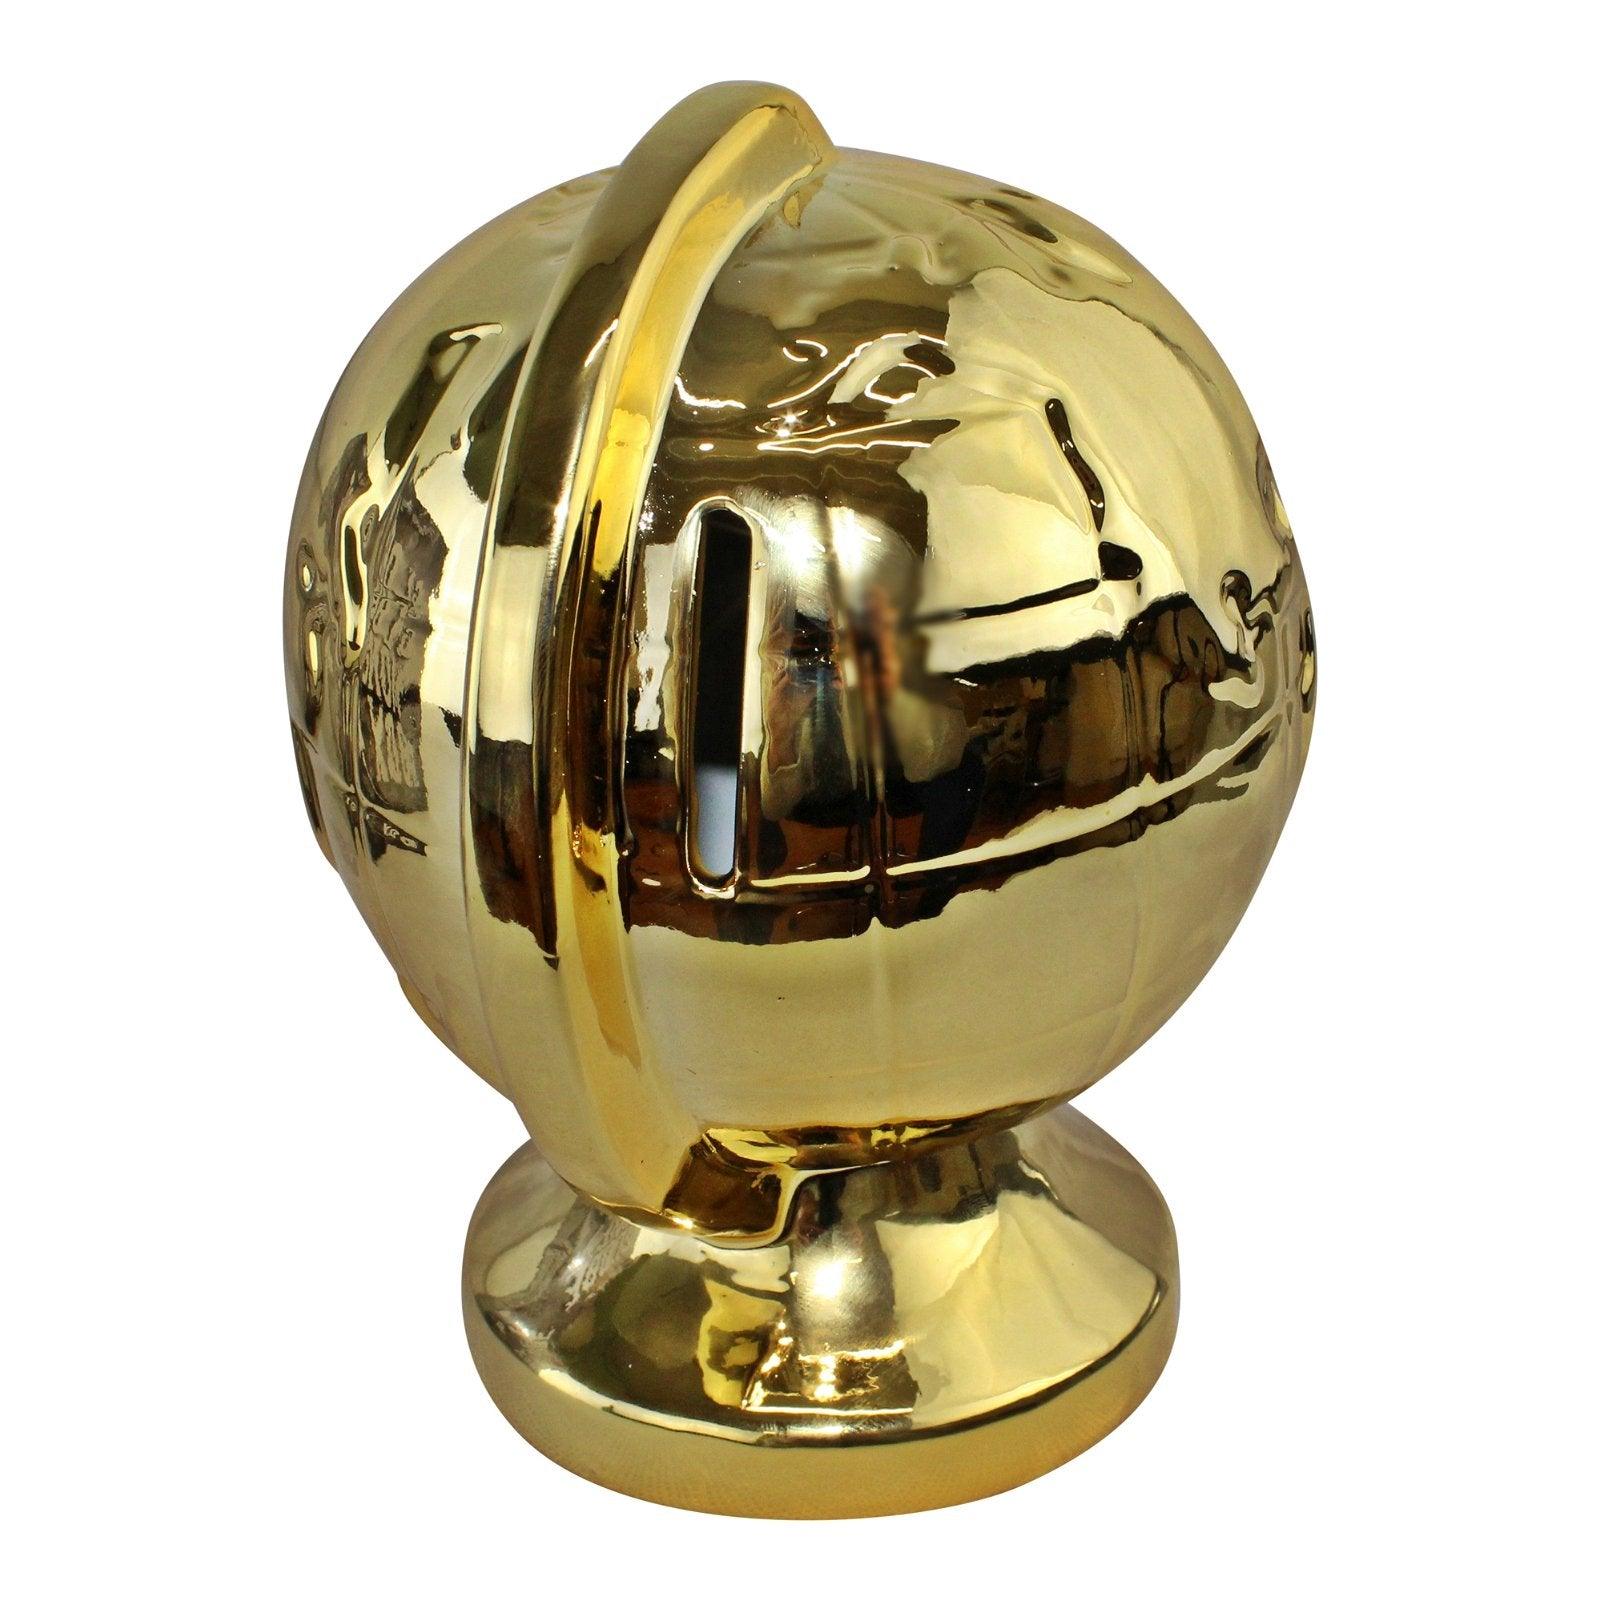 Metallic Gold Ceramic Globe Style Money Box - £18.99 - Money Boxes 